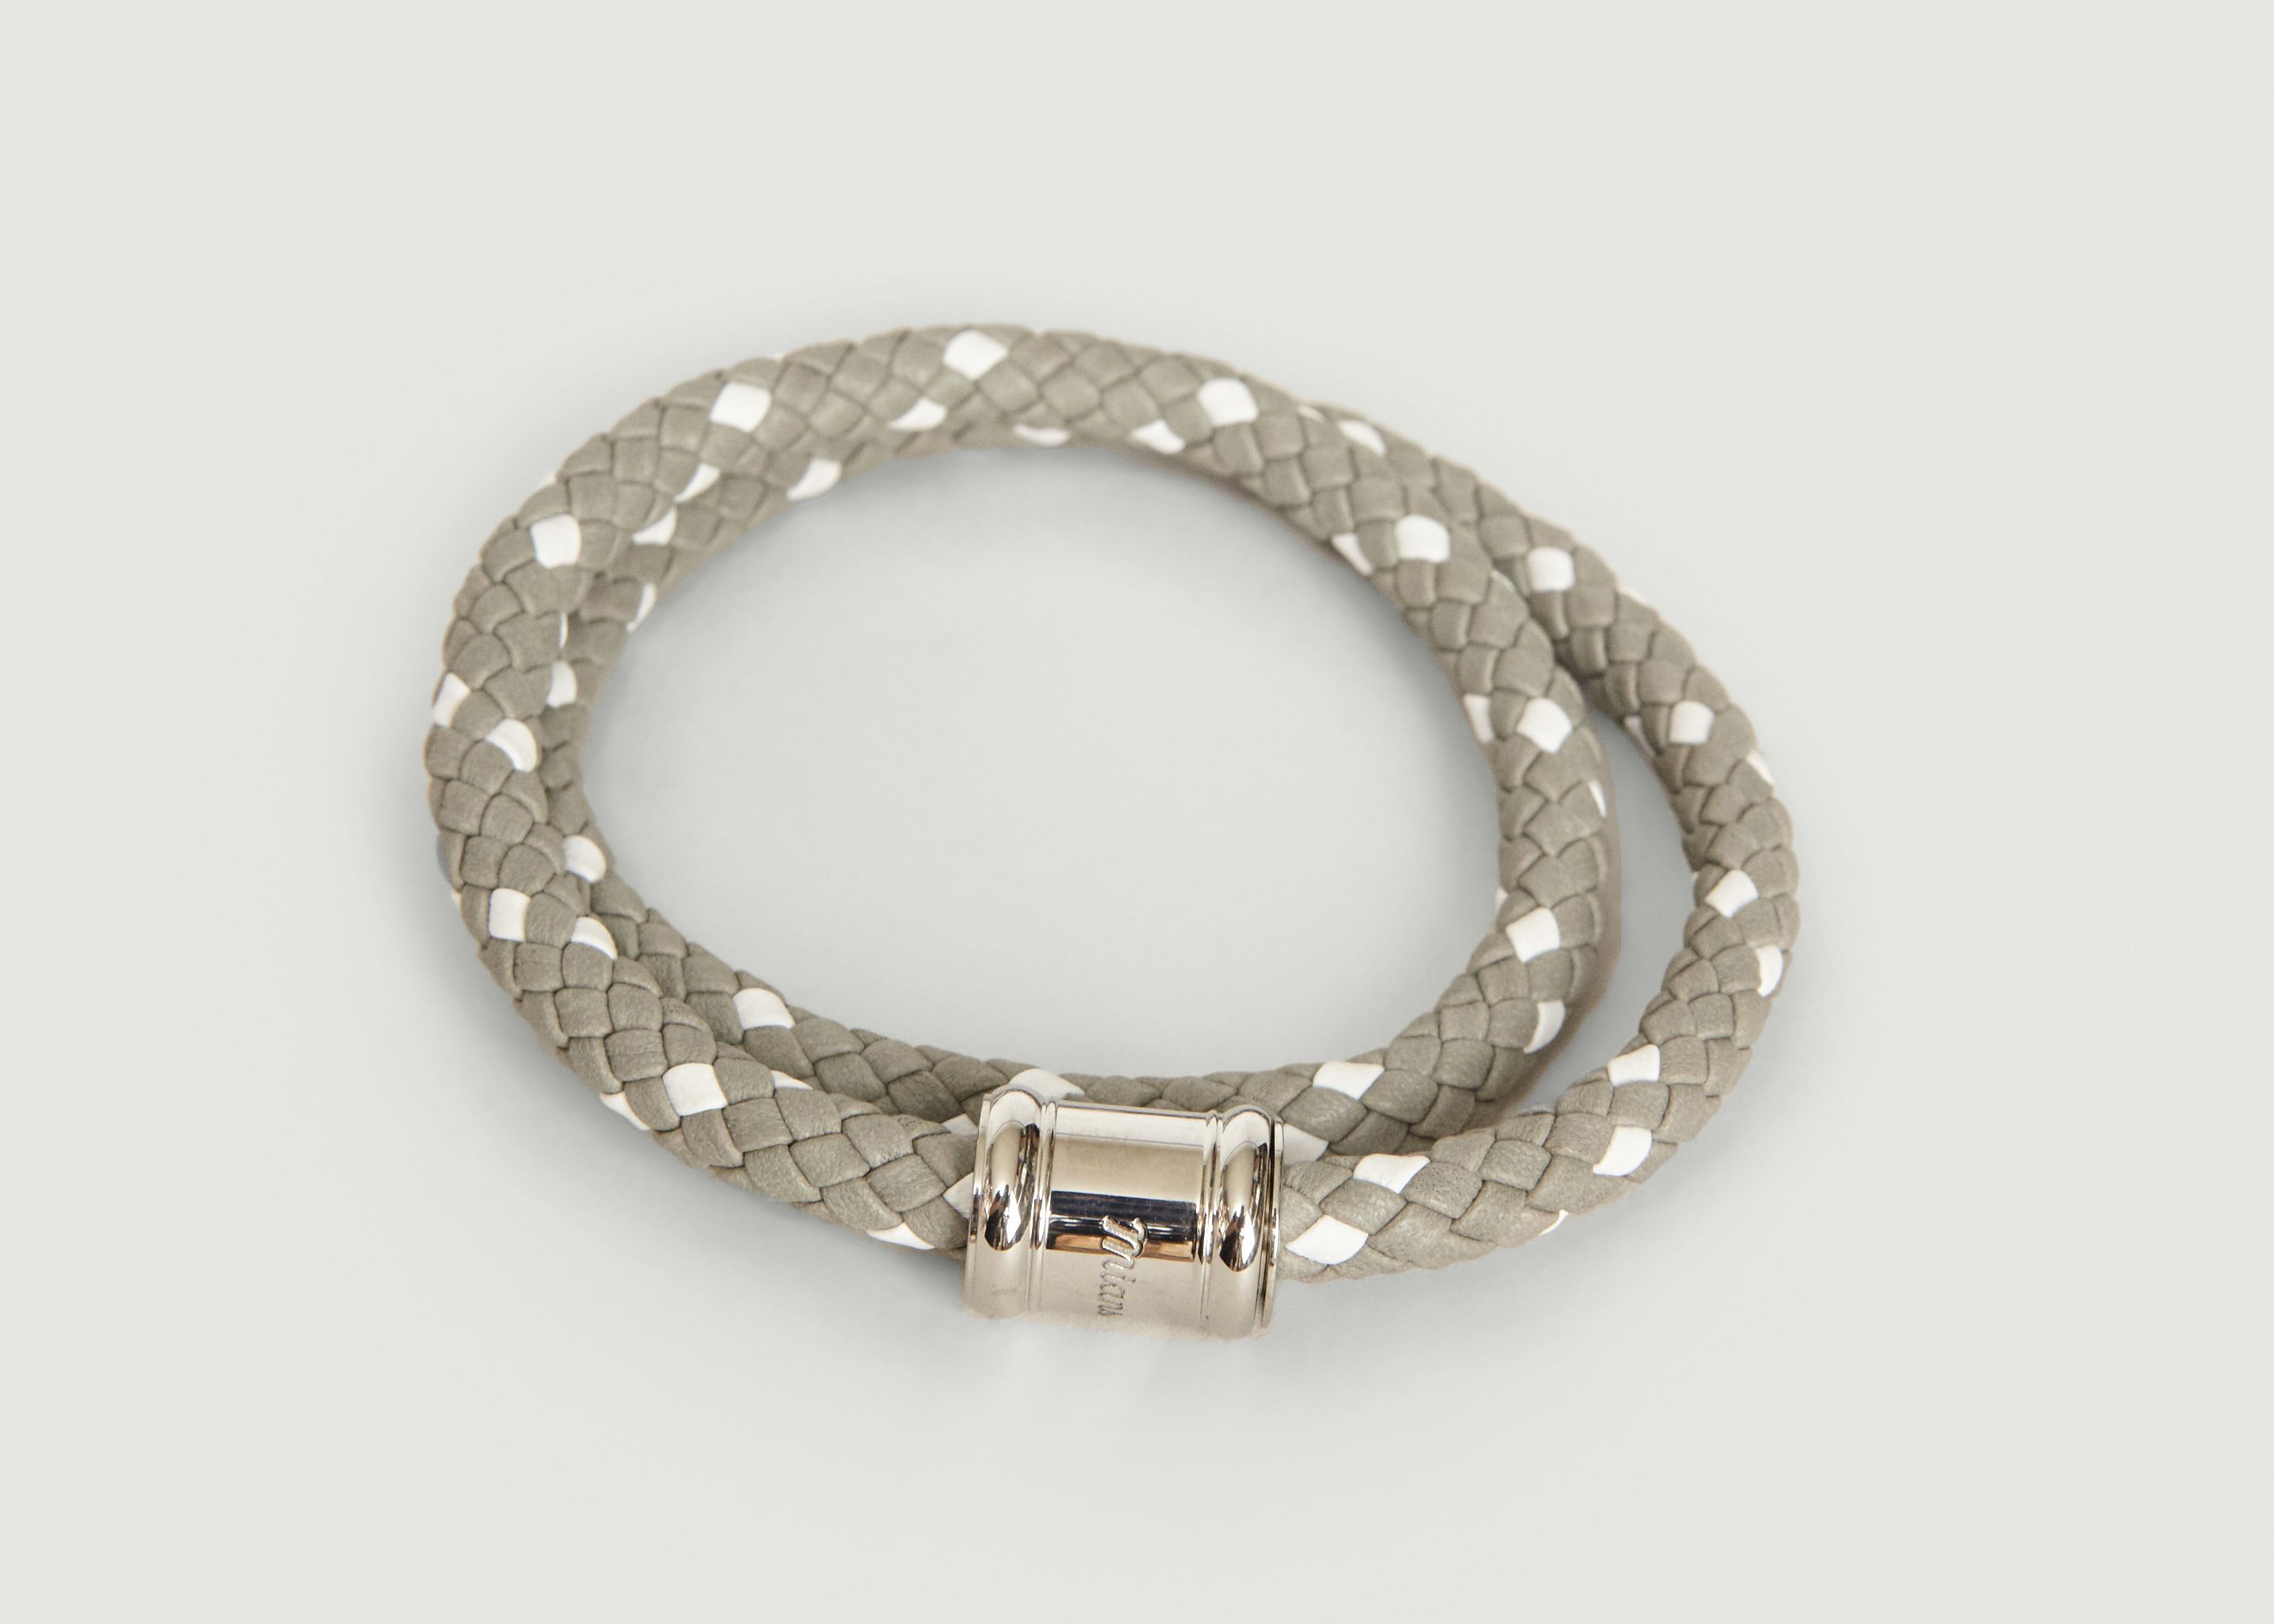 Woven Leather Bracelet - Miansai